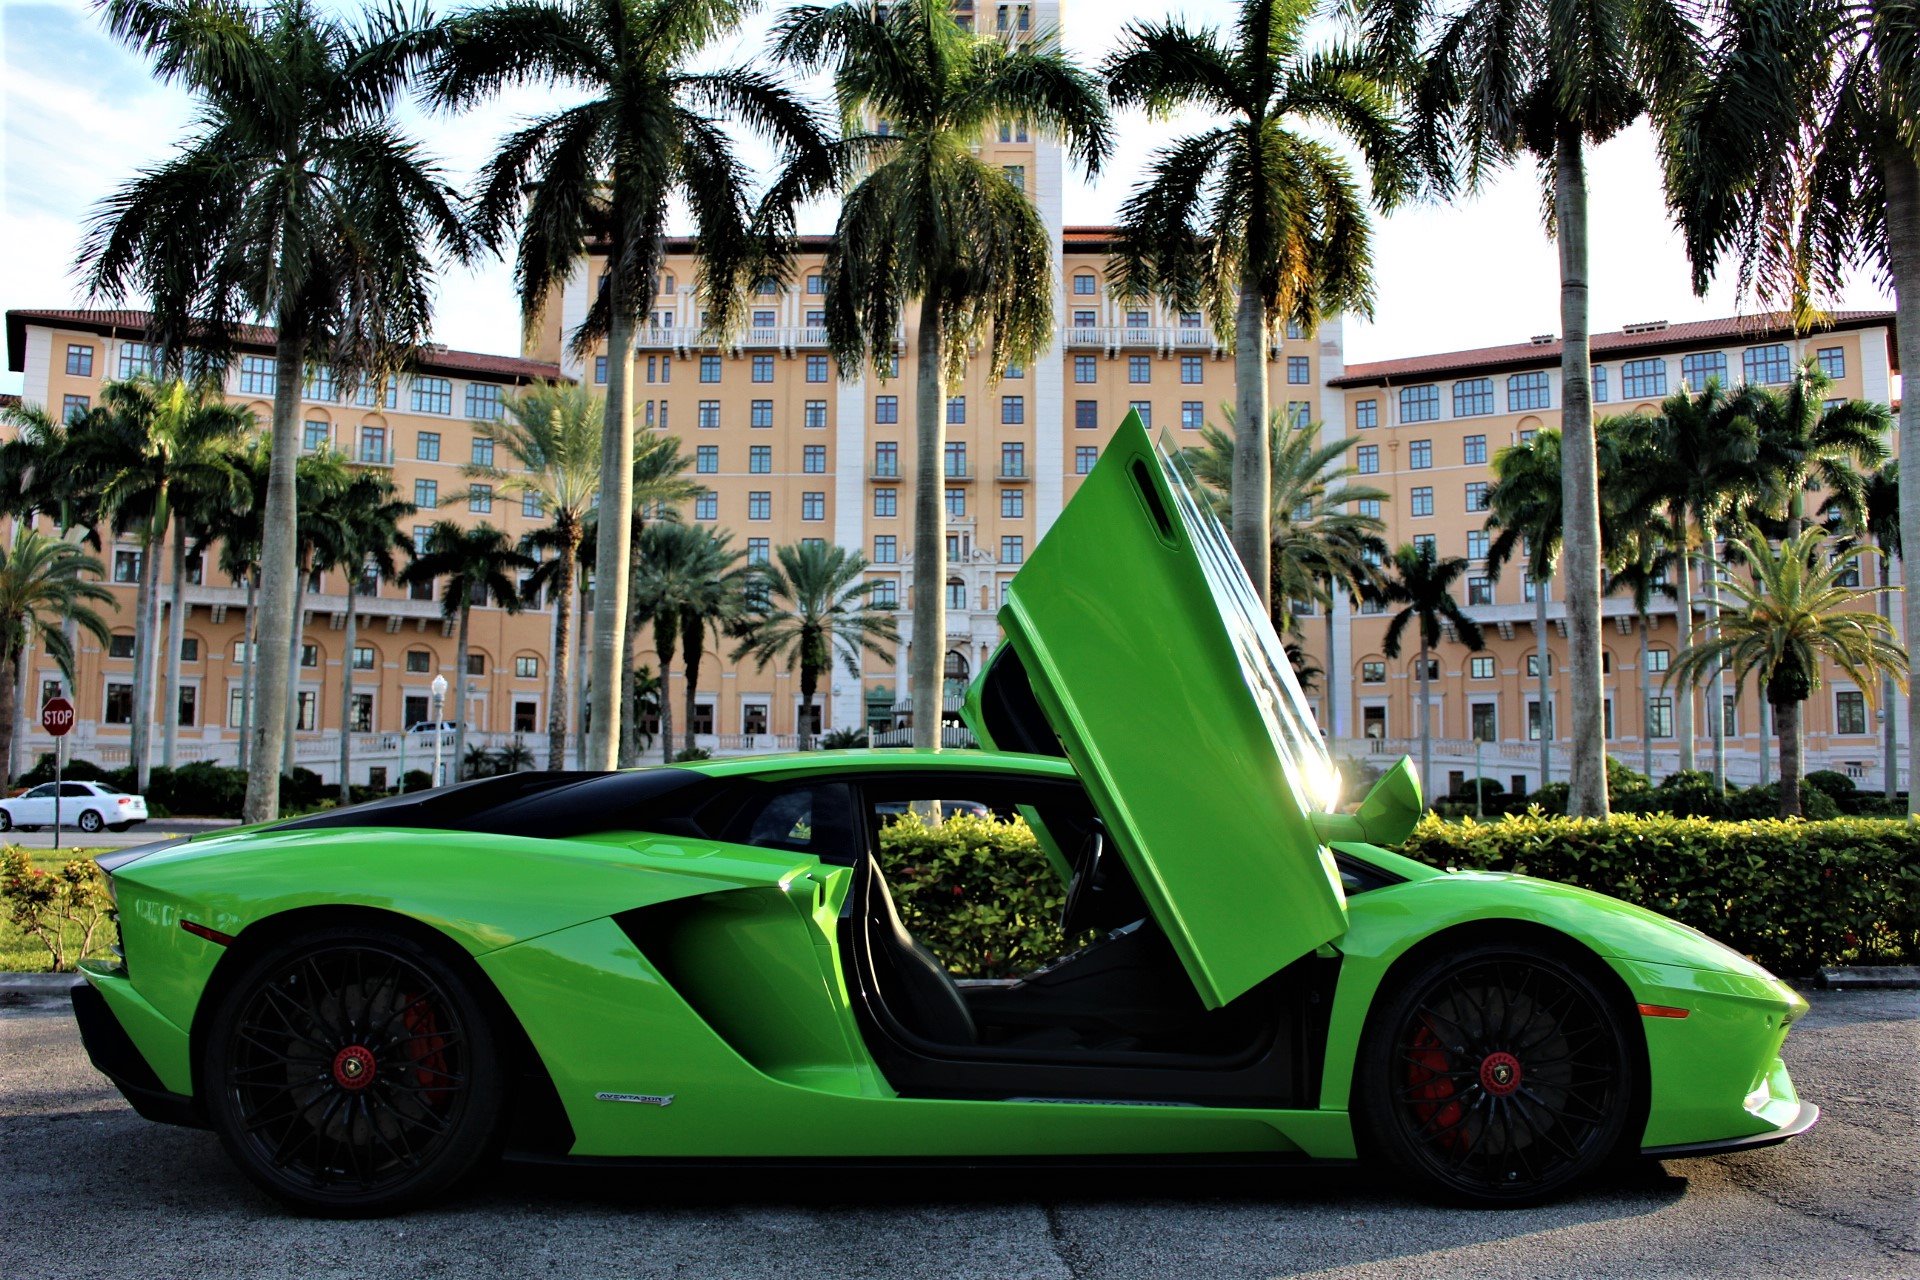 Used 2018 Lamborghini Aventador S LP 740-4 S for sale Sold at The Gables Sports Cars in Miami FL 33146 2